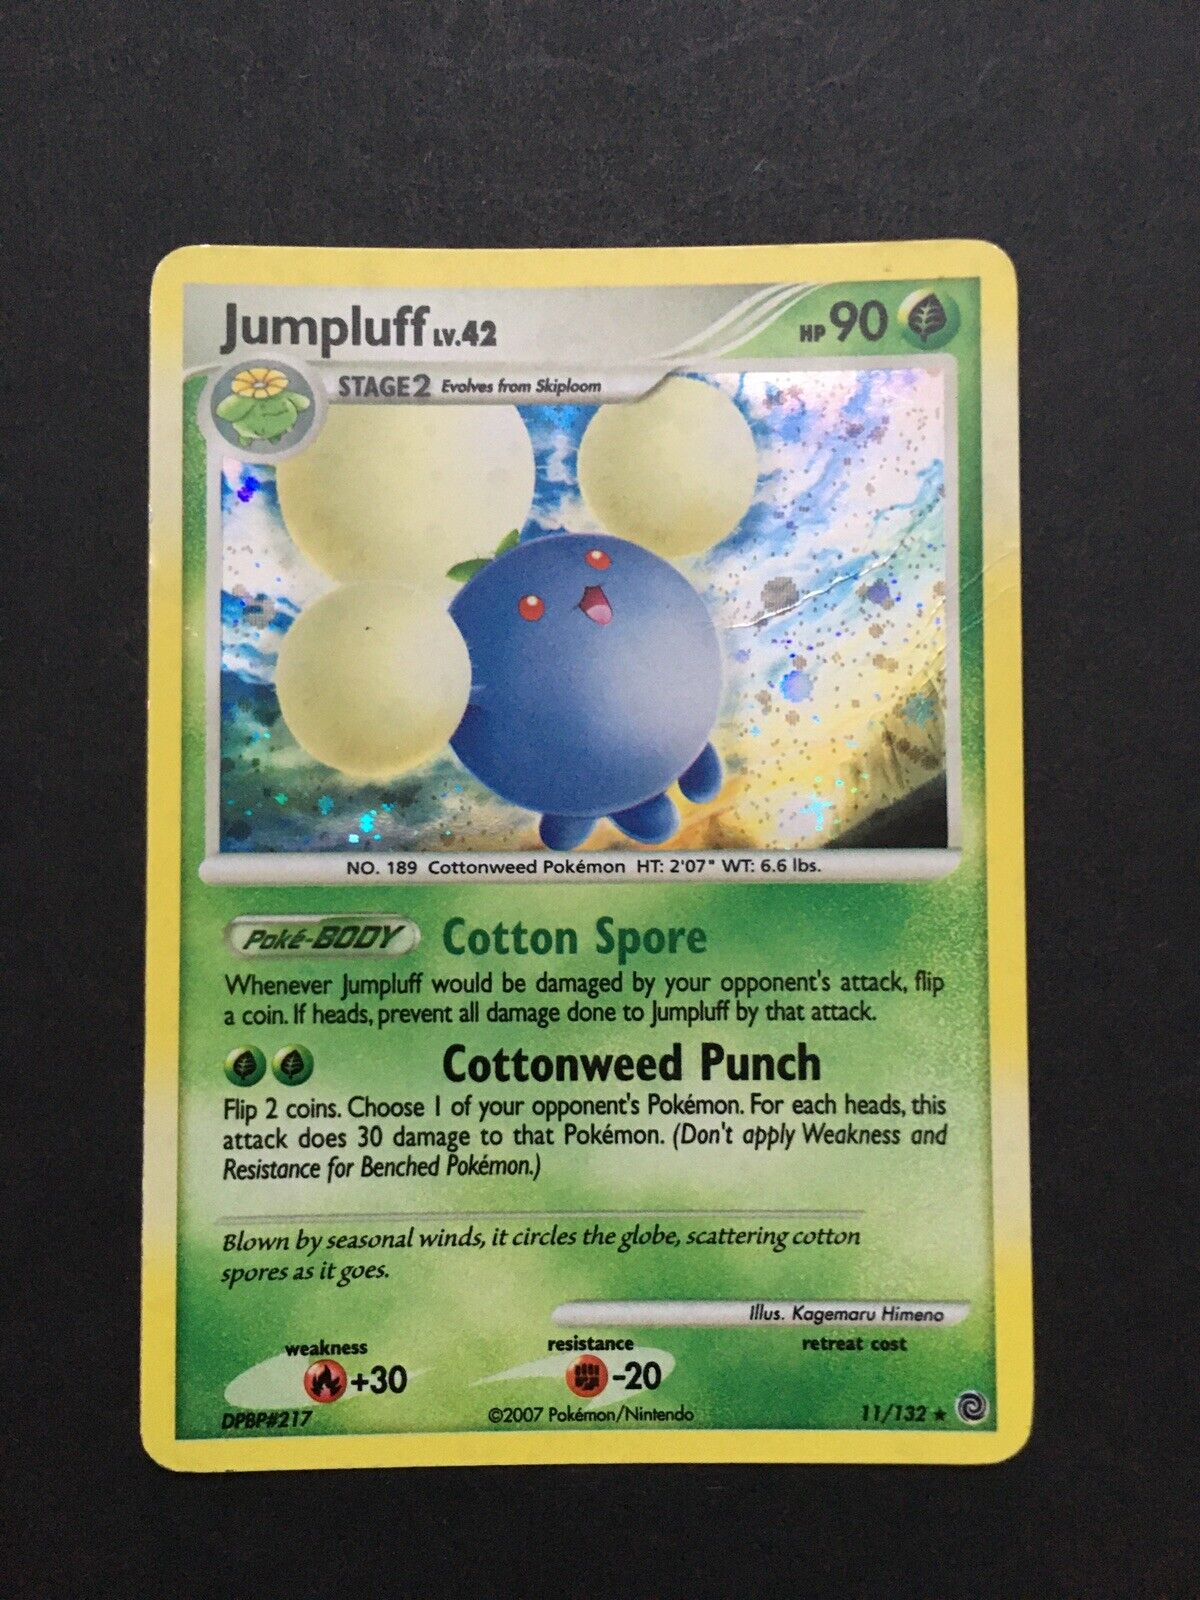 Jumpluff LV.42 11/132 Holo - Secret Wonders - Very Good - Rare Pokémon Card